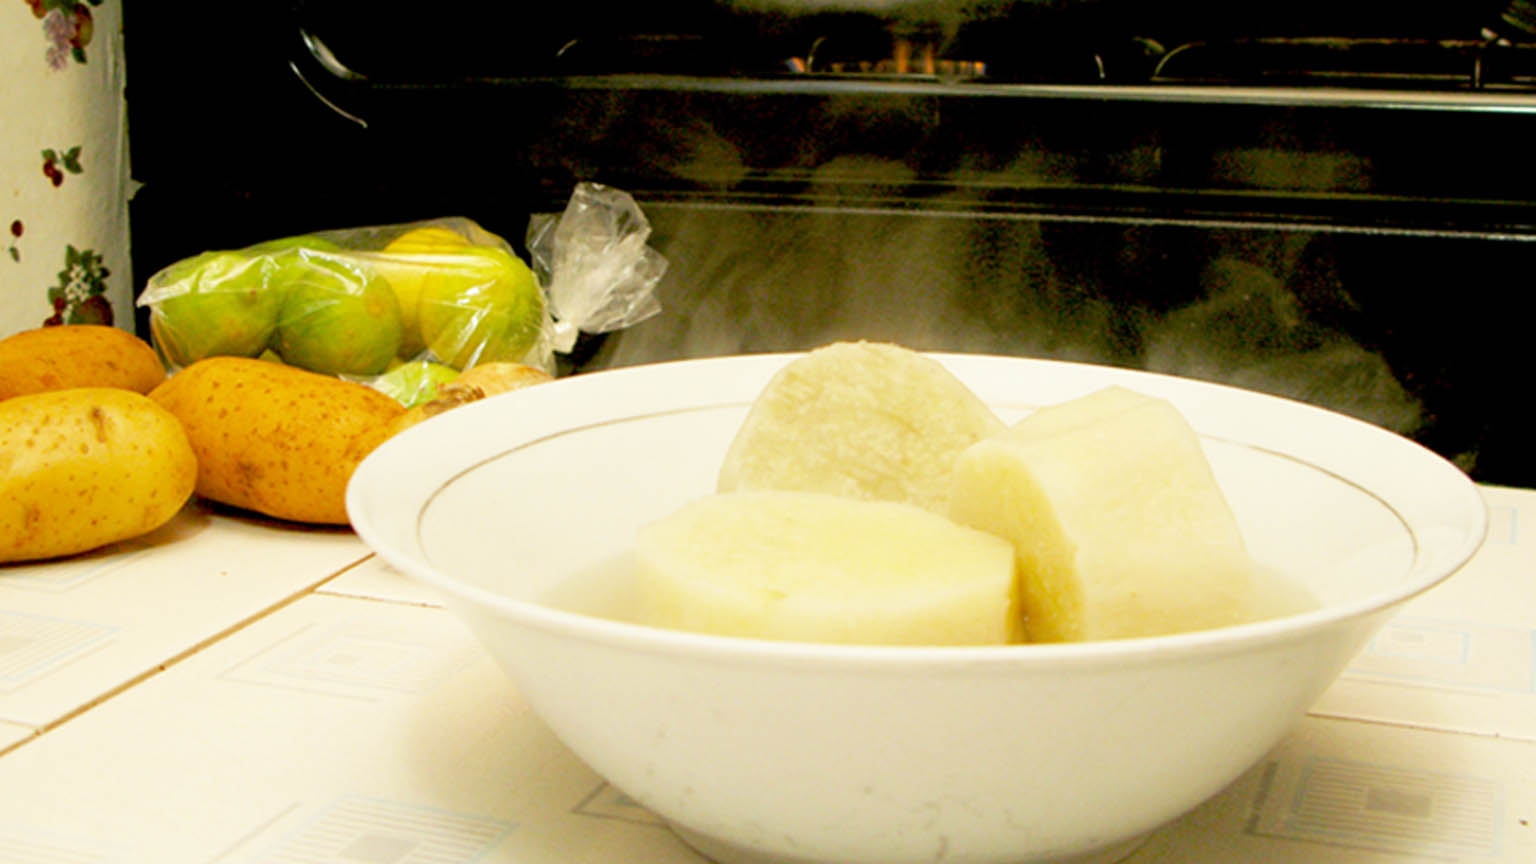 Boiled Yellow Yam – Jamaican Dinners